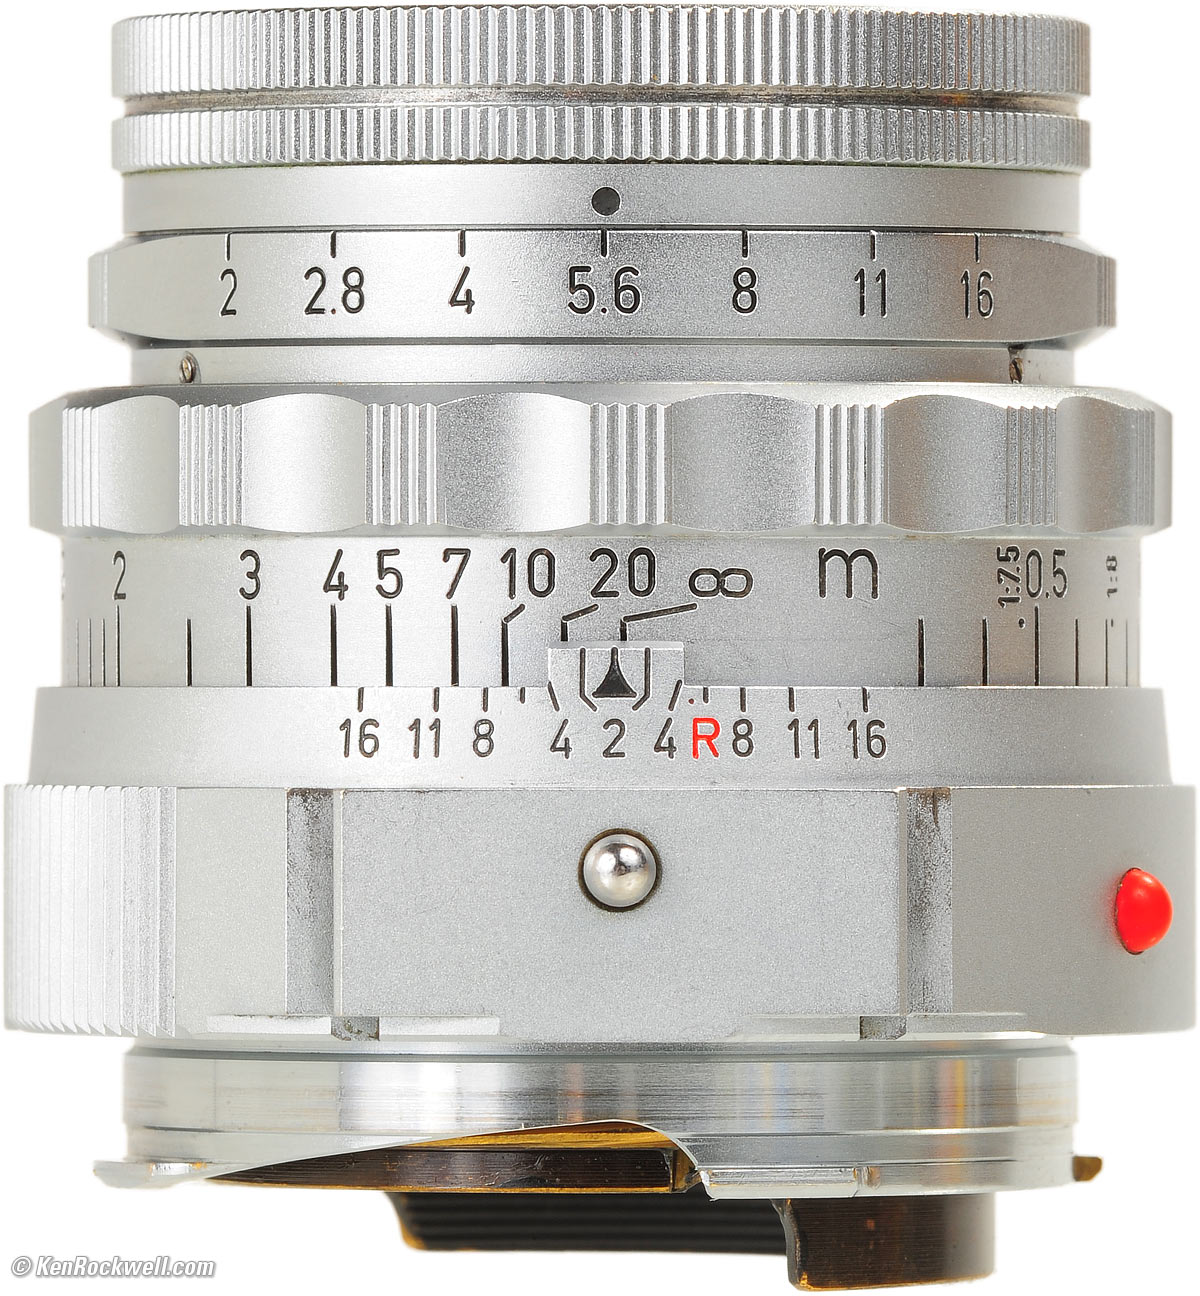 LEICA 50mm f/2 SUMMICRON with Near-Focusing Range (1956-1968)